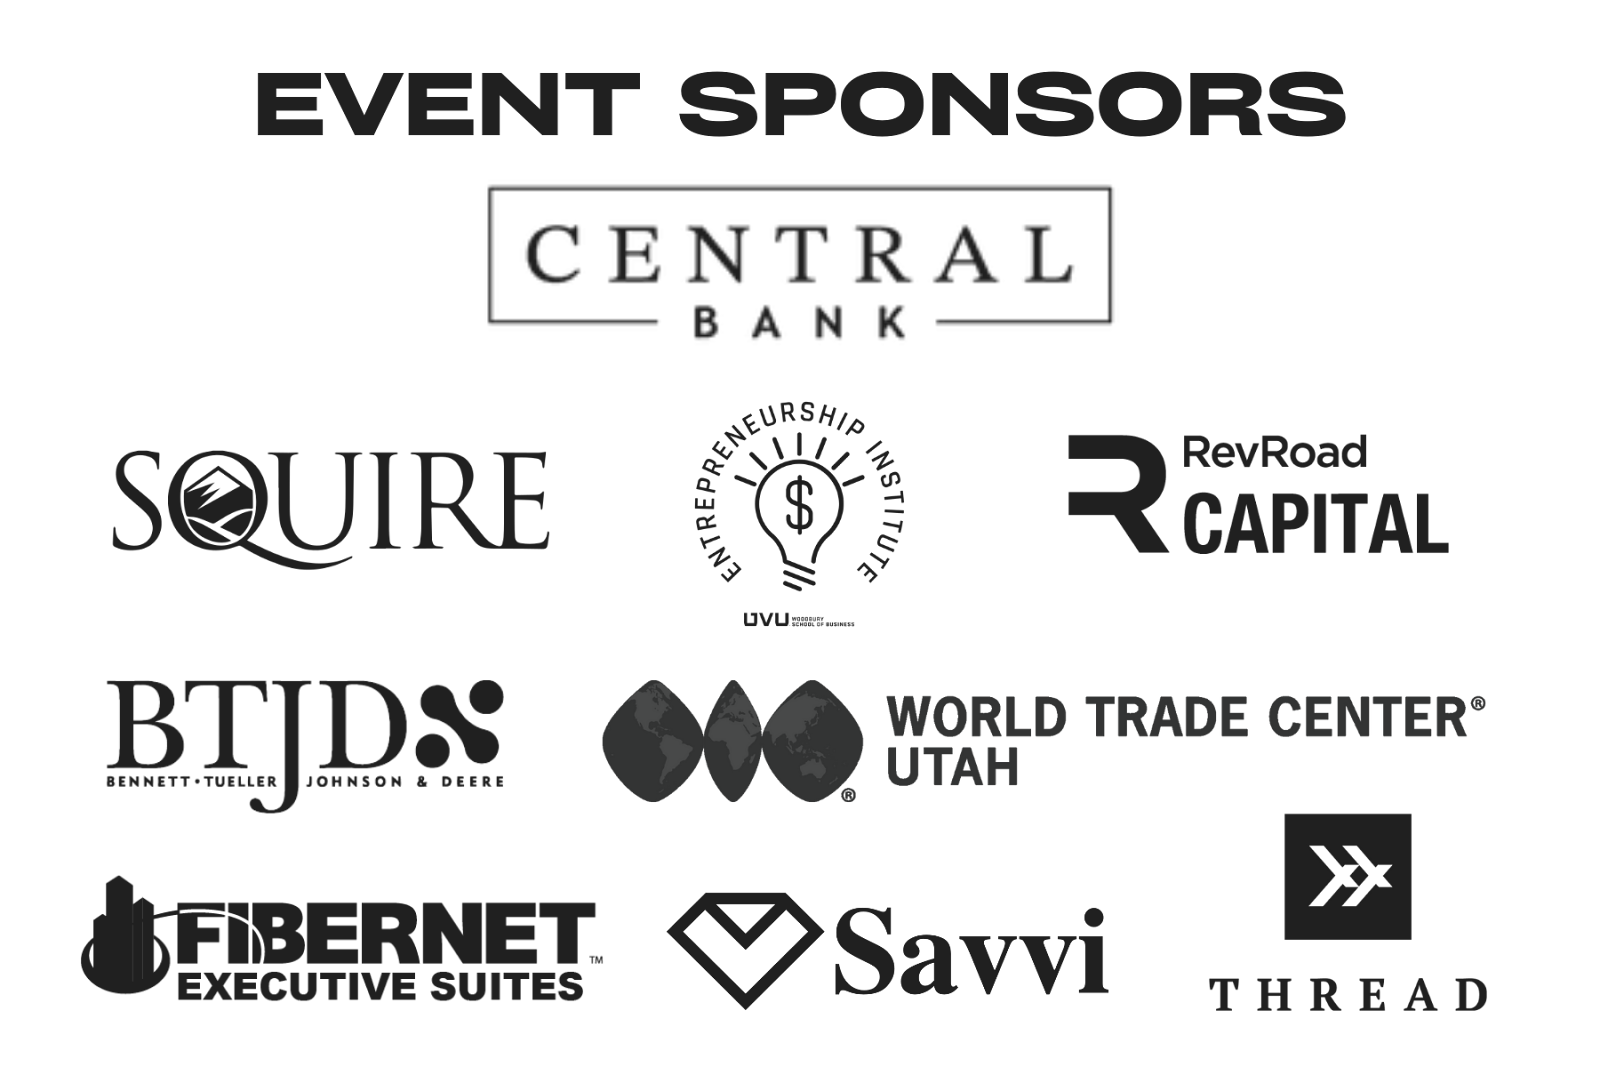 Event Sponsors for RevRoads Entrepreneur Competition of 2022 include Central Bank, Squire, RevRoad Captial, BTJD, Savvi, Thread, Fibernet Executive Suites,  World Trade Center Utah, and UVU Entrepreneurship Center.